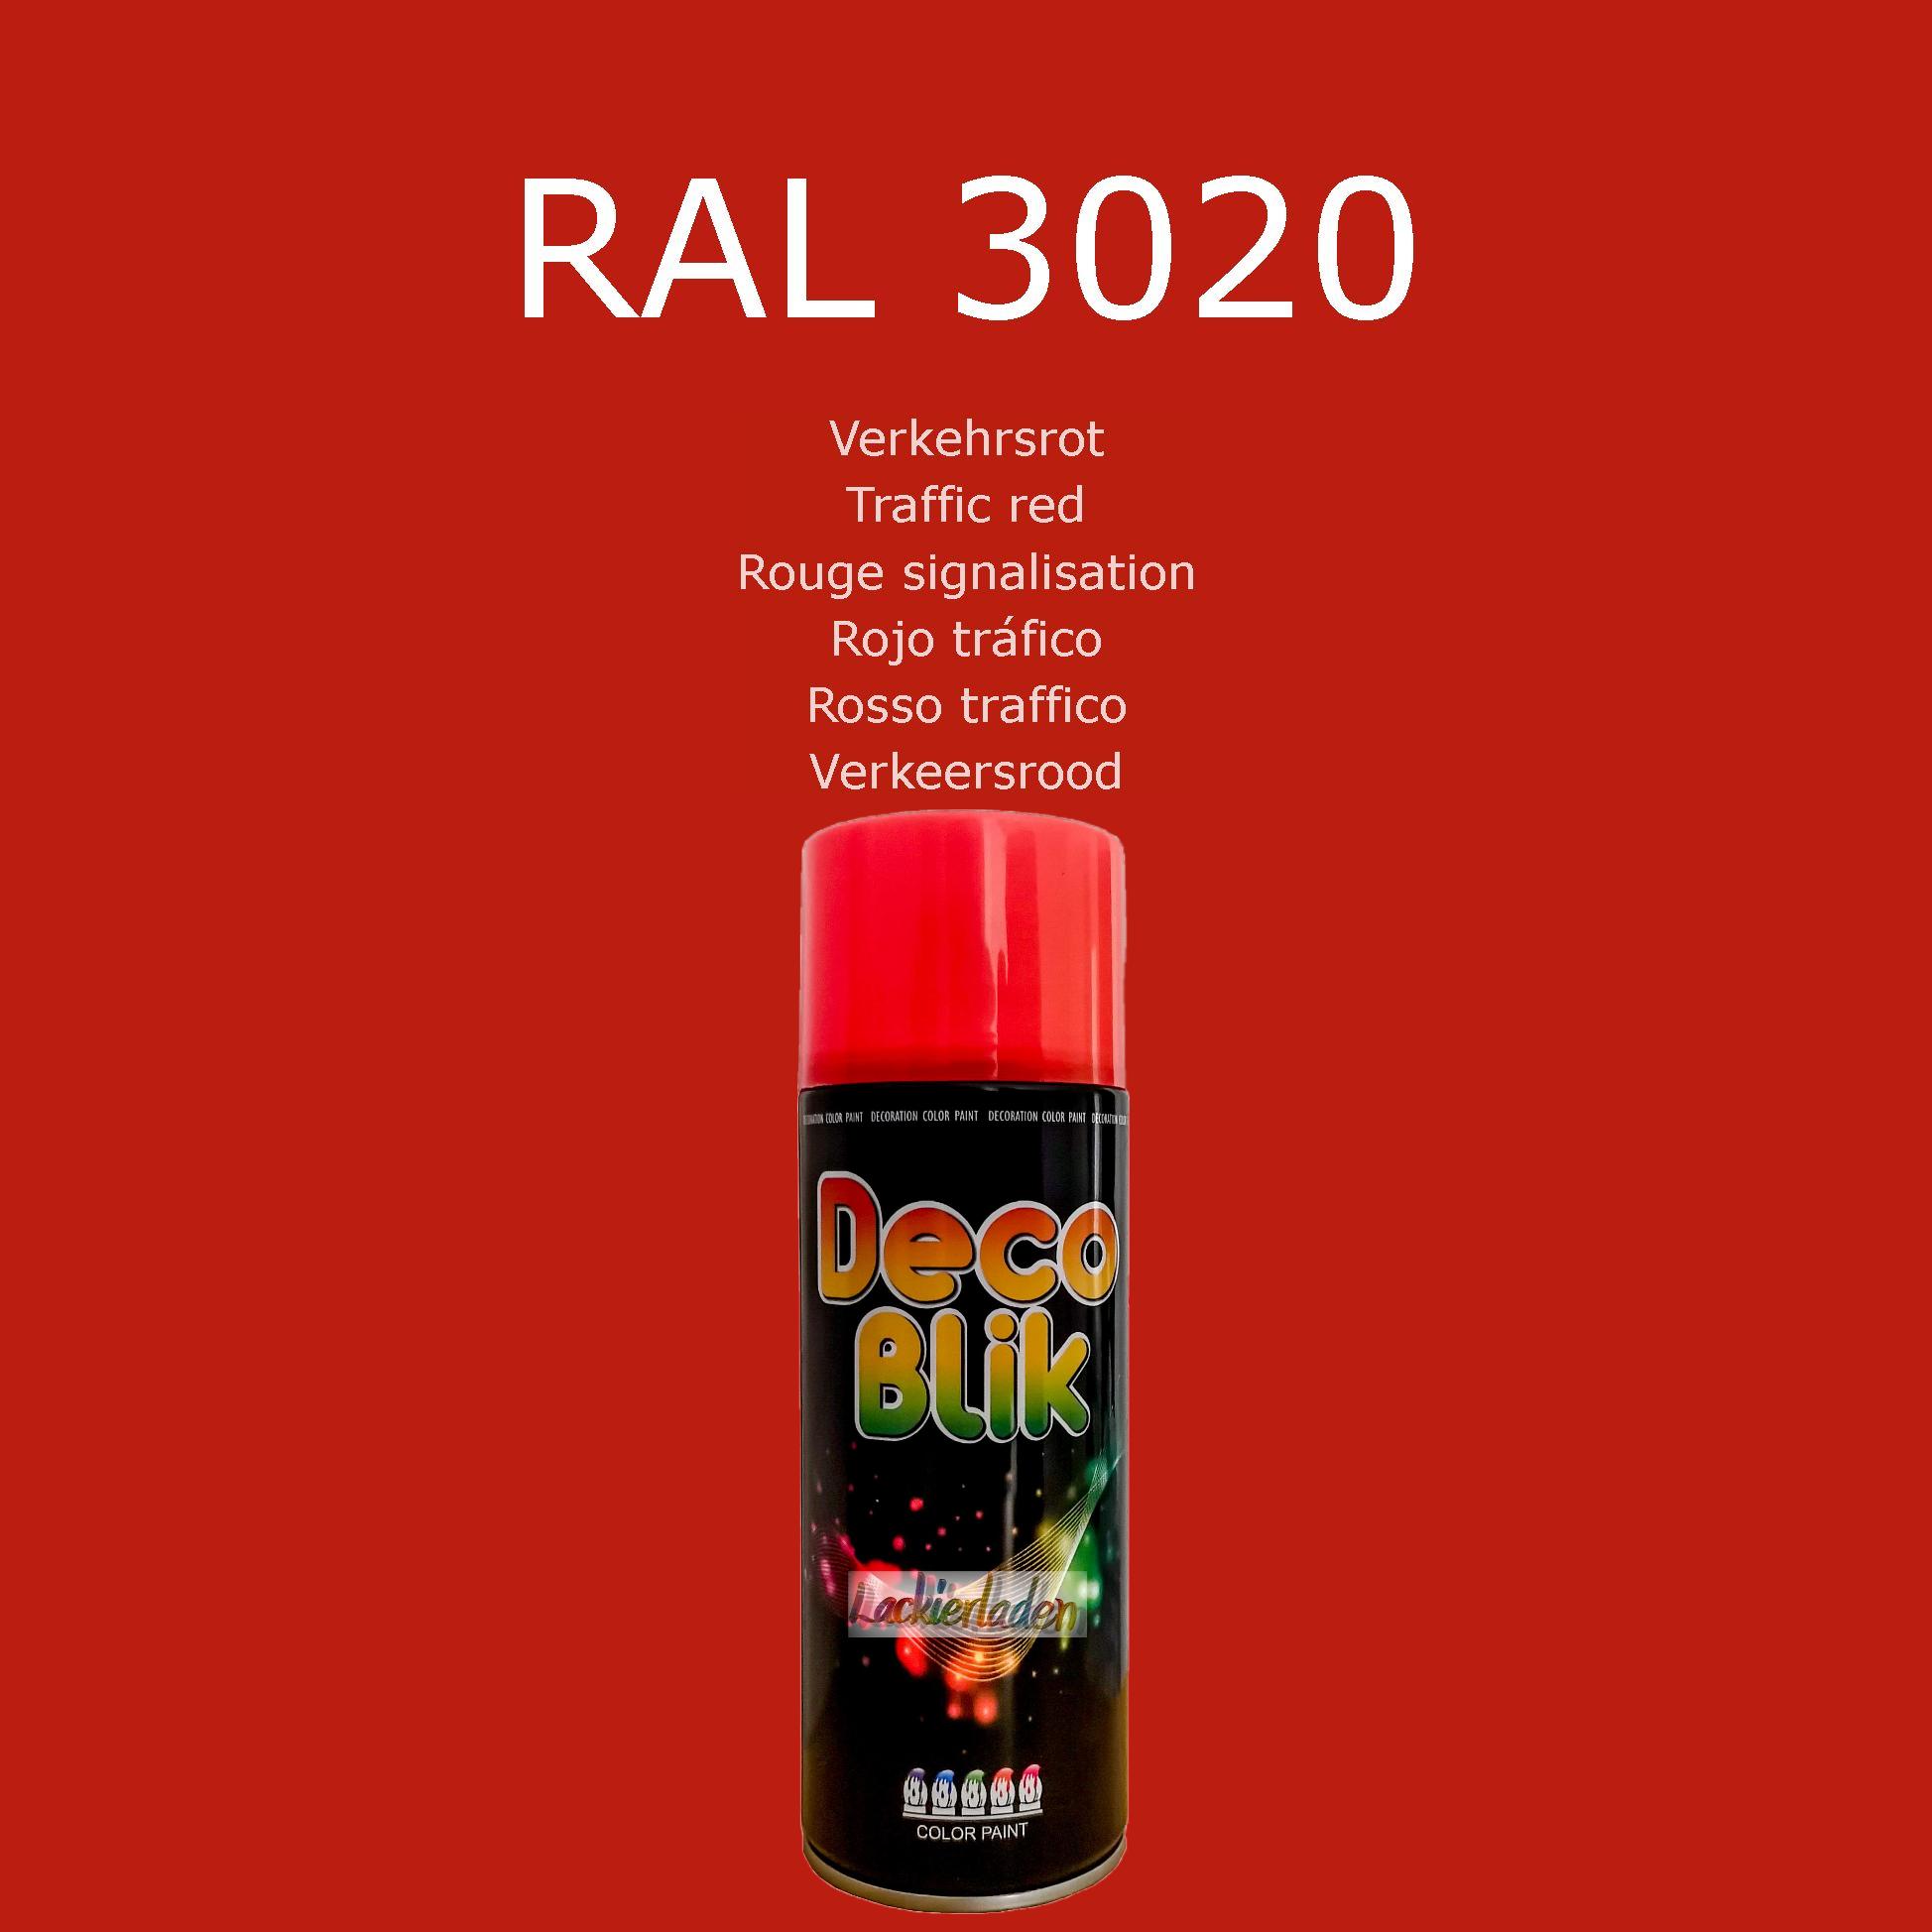 Zollex Decolack Spraydose 400 ml RAL 3020 Verkehrsrot Traffic red Rouge signalisation Rojo tráfico Rosso traffico Verkeersrood | Dekolack Lackspray Sprüh Dose